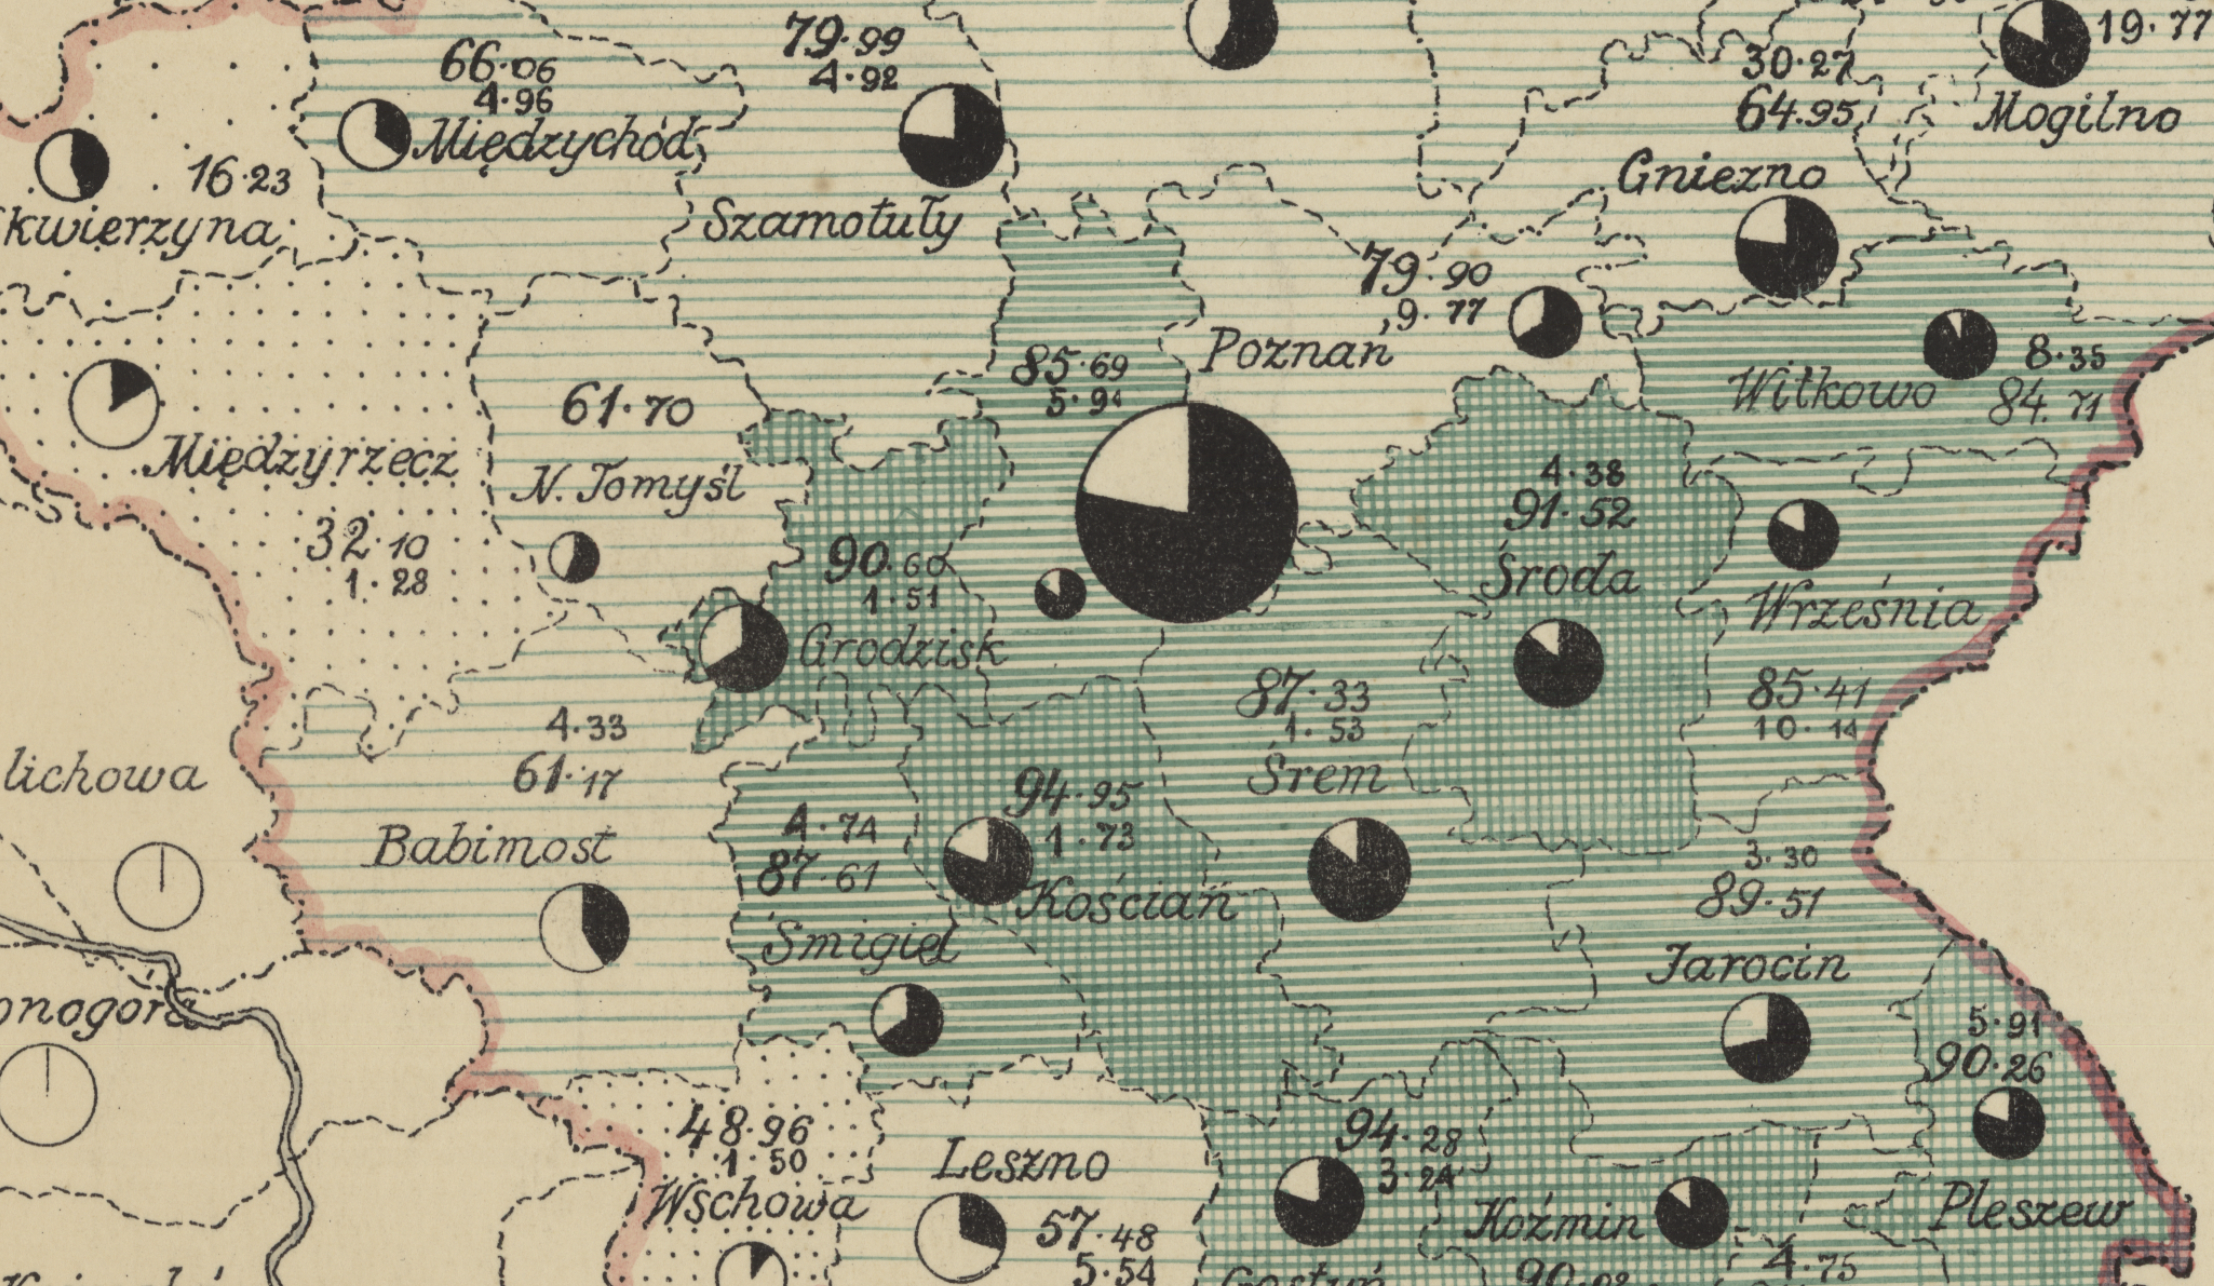 Screenshot of old hand-drawn map of Poland showing pie chart symbols for German vs. Polish schoolchildren